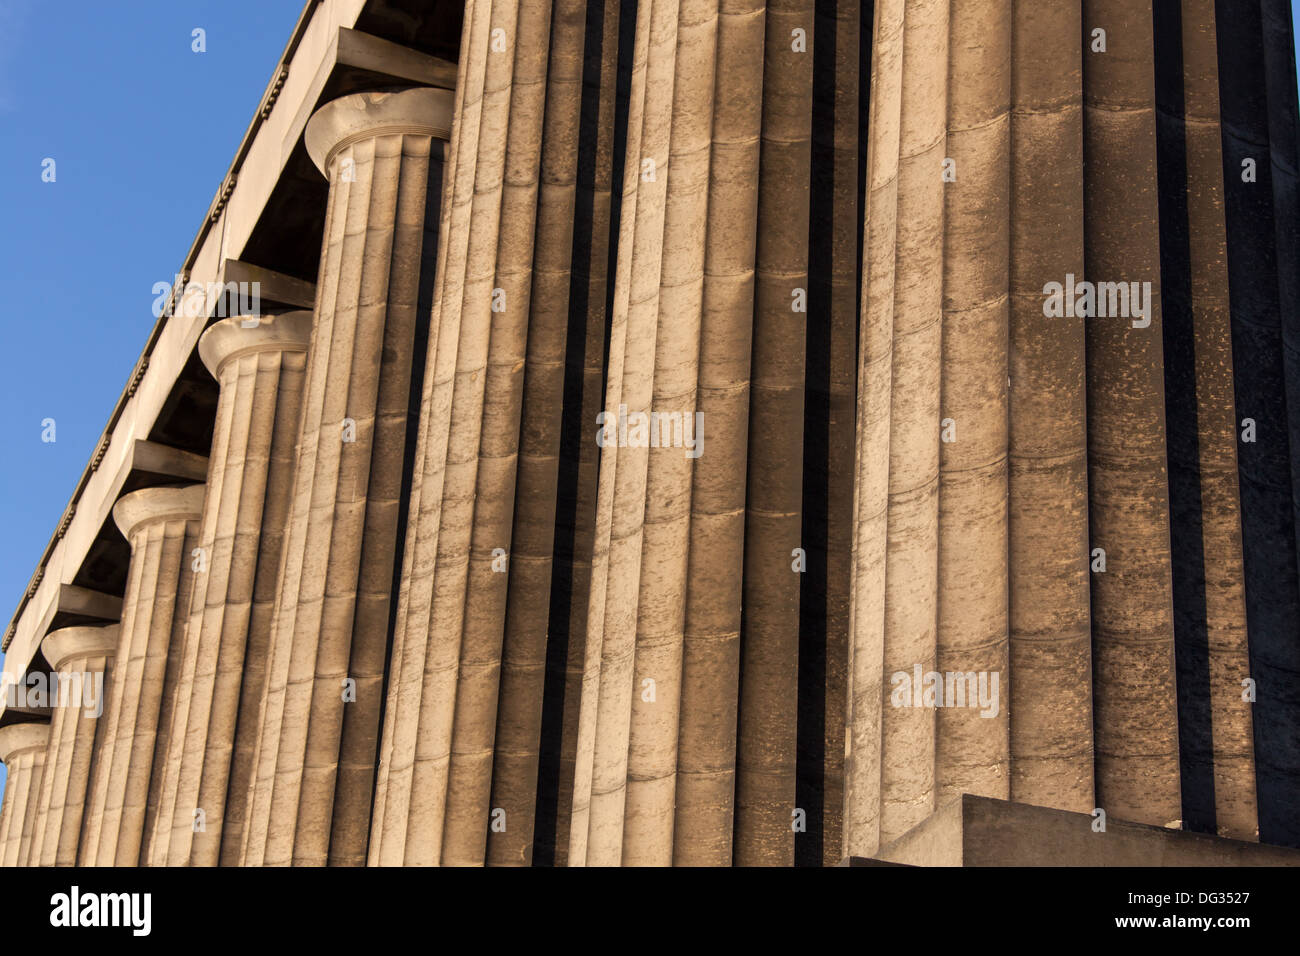 City of Edinburgh, Scotland. The unfinished Greek Athenian Acropolis on Edinburgh’s Calton Hill. Stock Photo